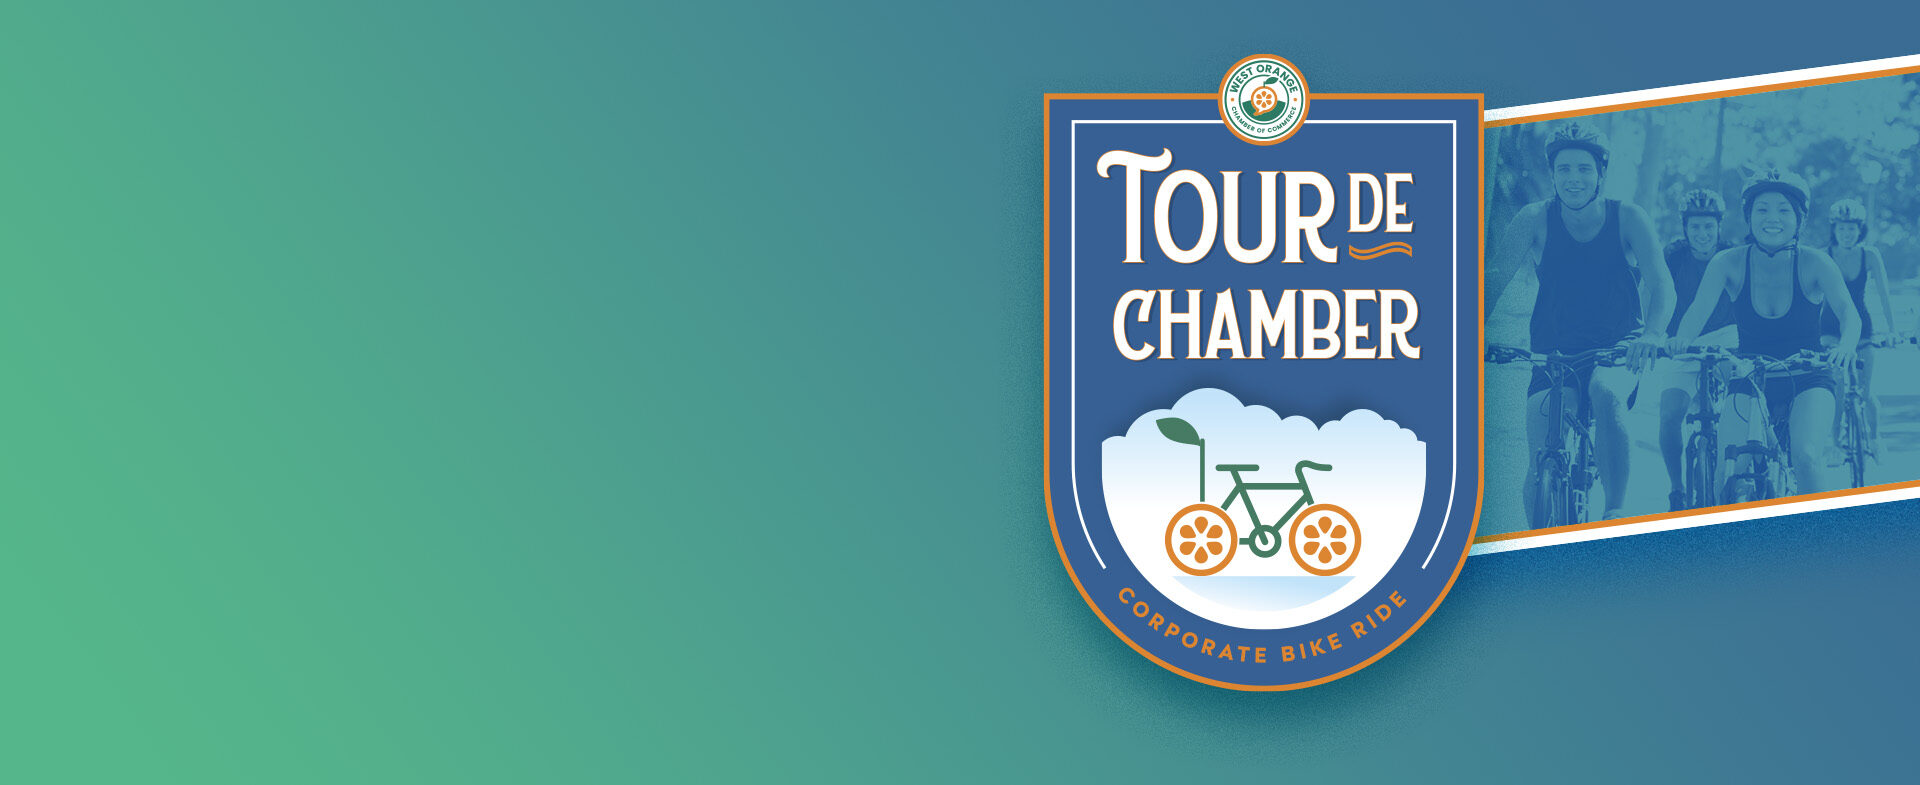 Tour De Chamber – Corporate Bike Ride